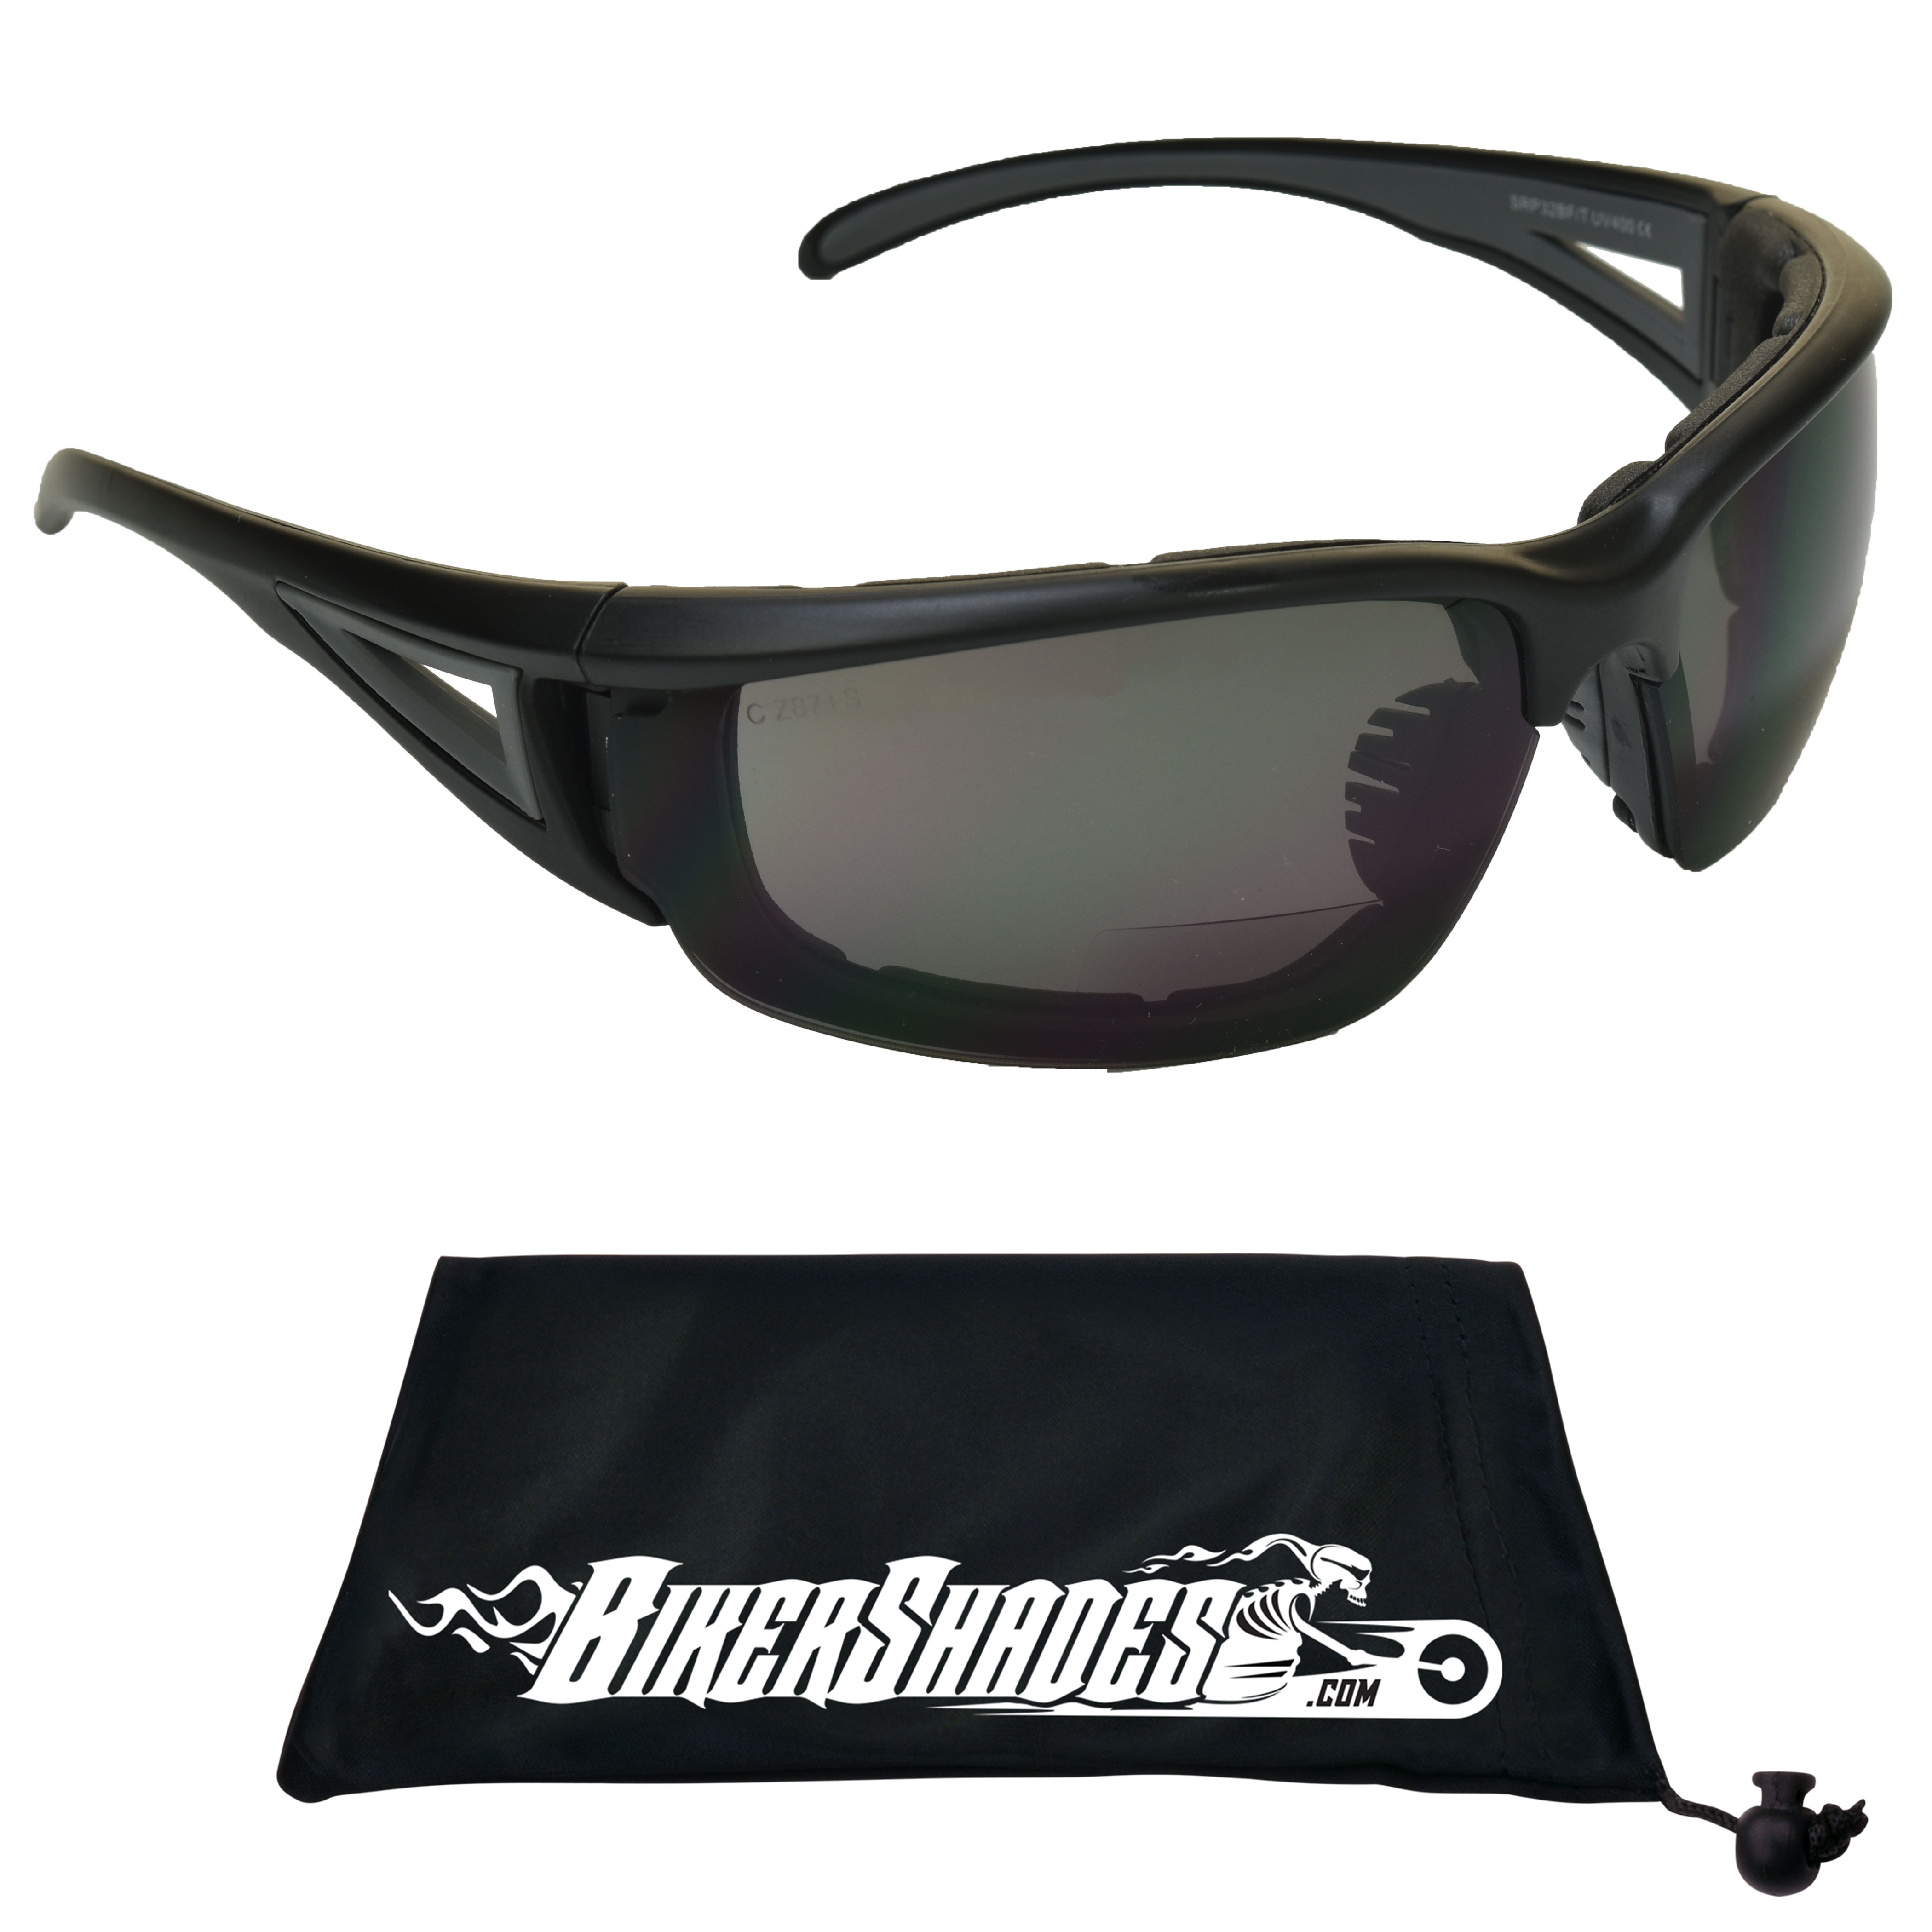 BIkershades Bifocal Safety Motorcycle Riding Foam Padded Sunglasses - image 1 of 6